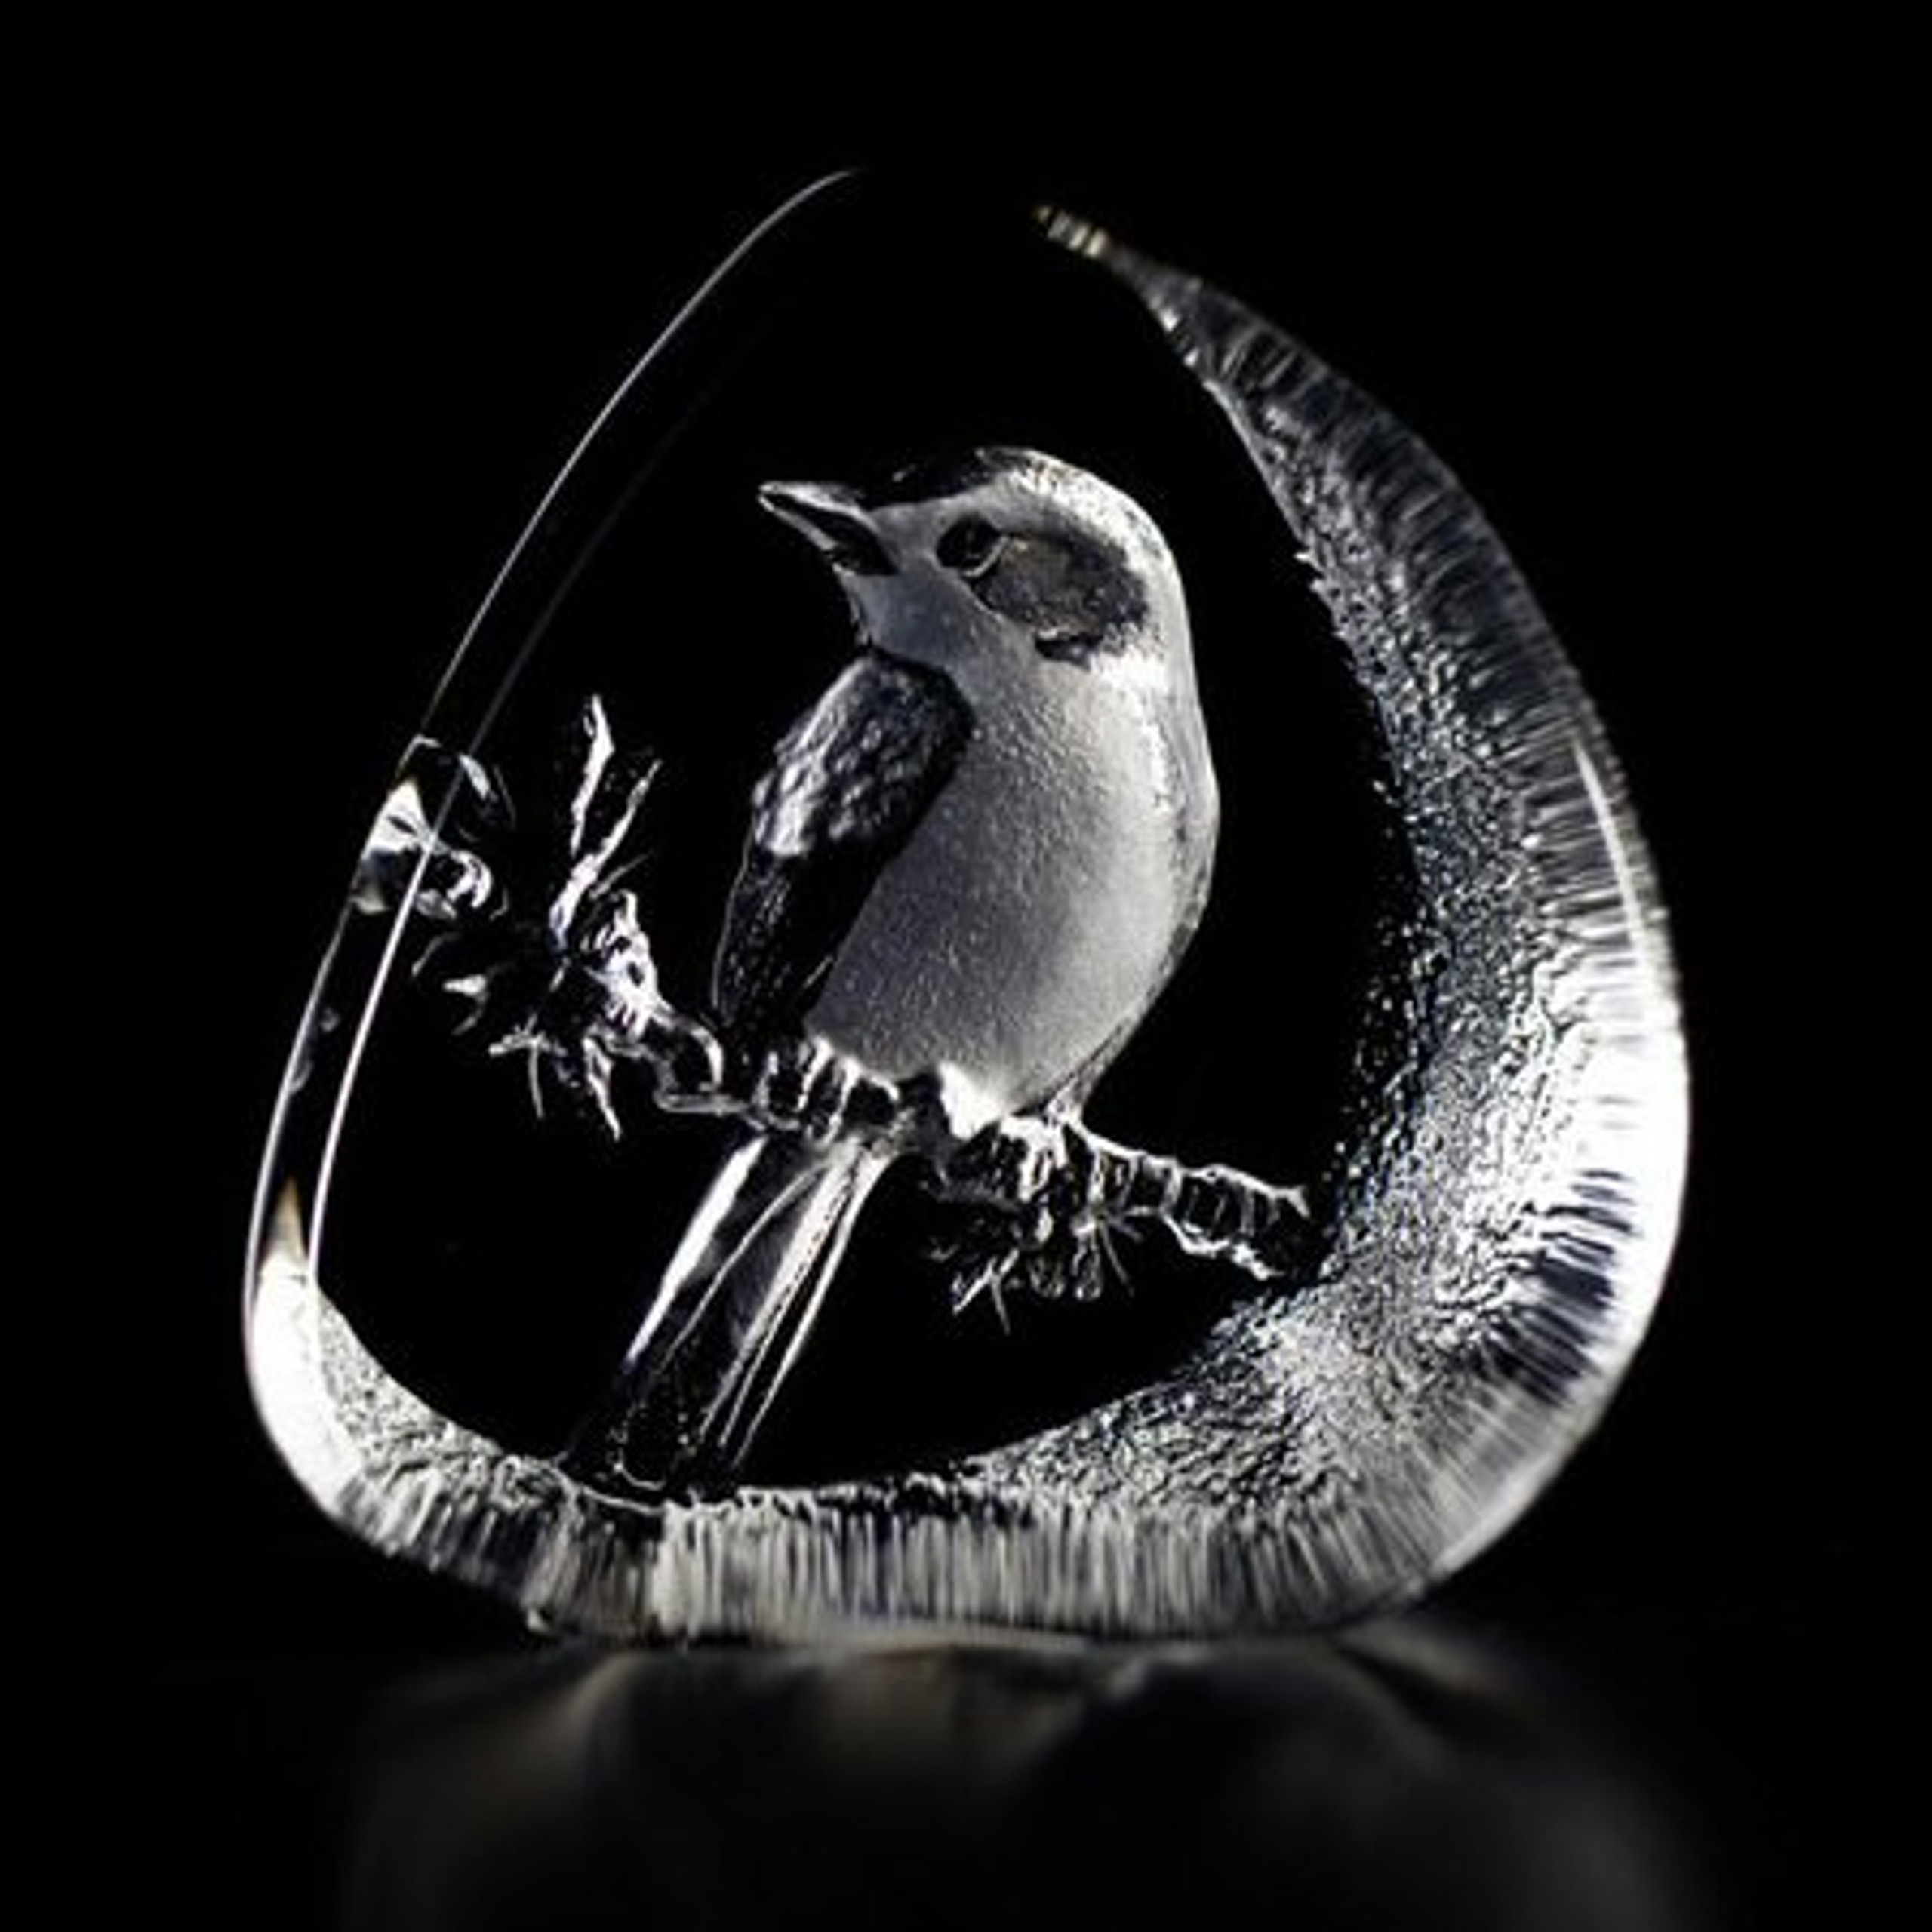 Flycatcher Bird Etched Crystal Sculpture By Mats Jonasson Art Glass Crystal Figurine